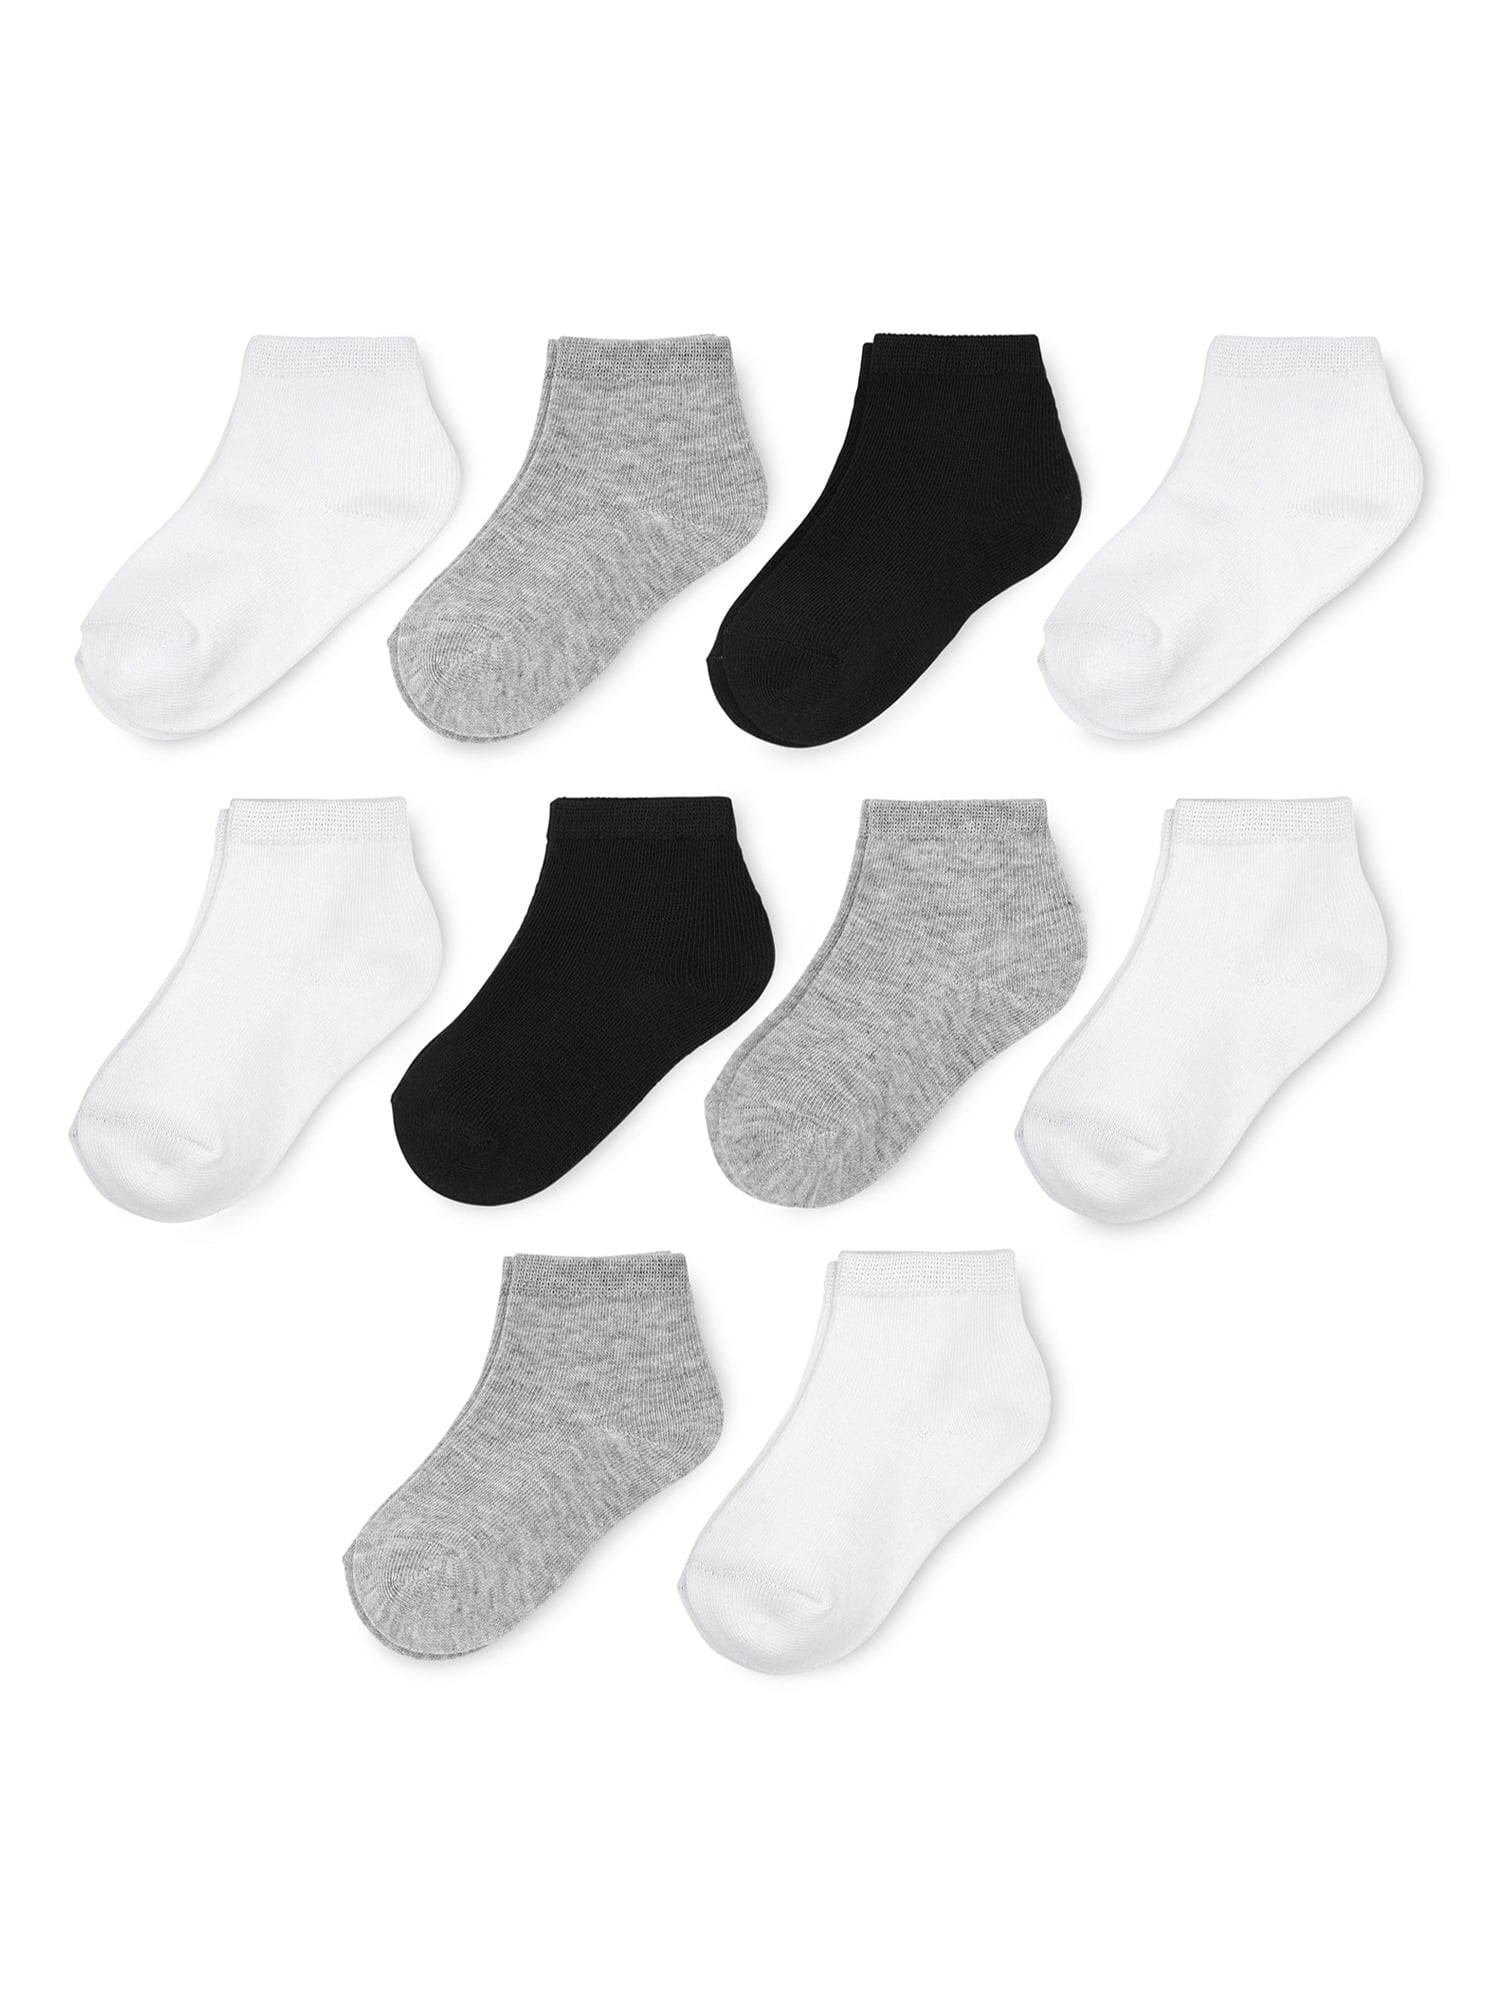 Boys Grey 15 Pairs Ribbed Ankle Socks School Childrens Kids Plain Grey Socks